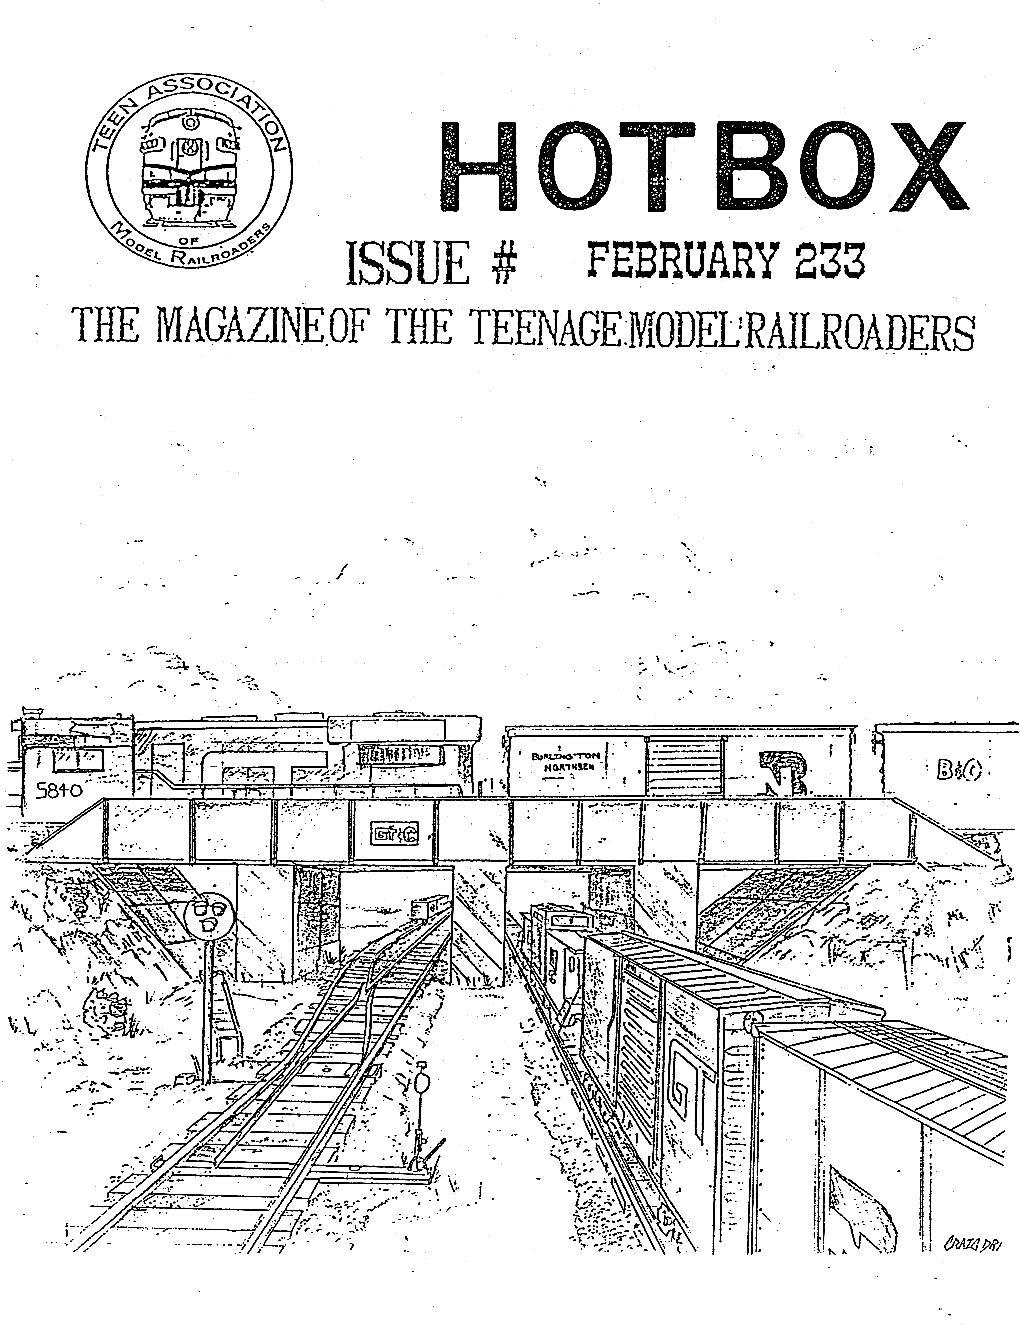 Issue# February 833 the Magazin.E.Of the Teenage~Model!Railroaders